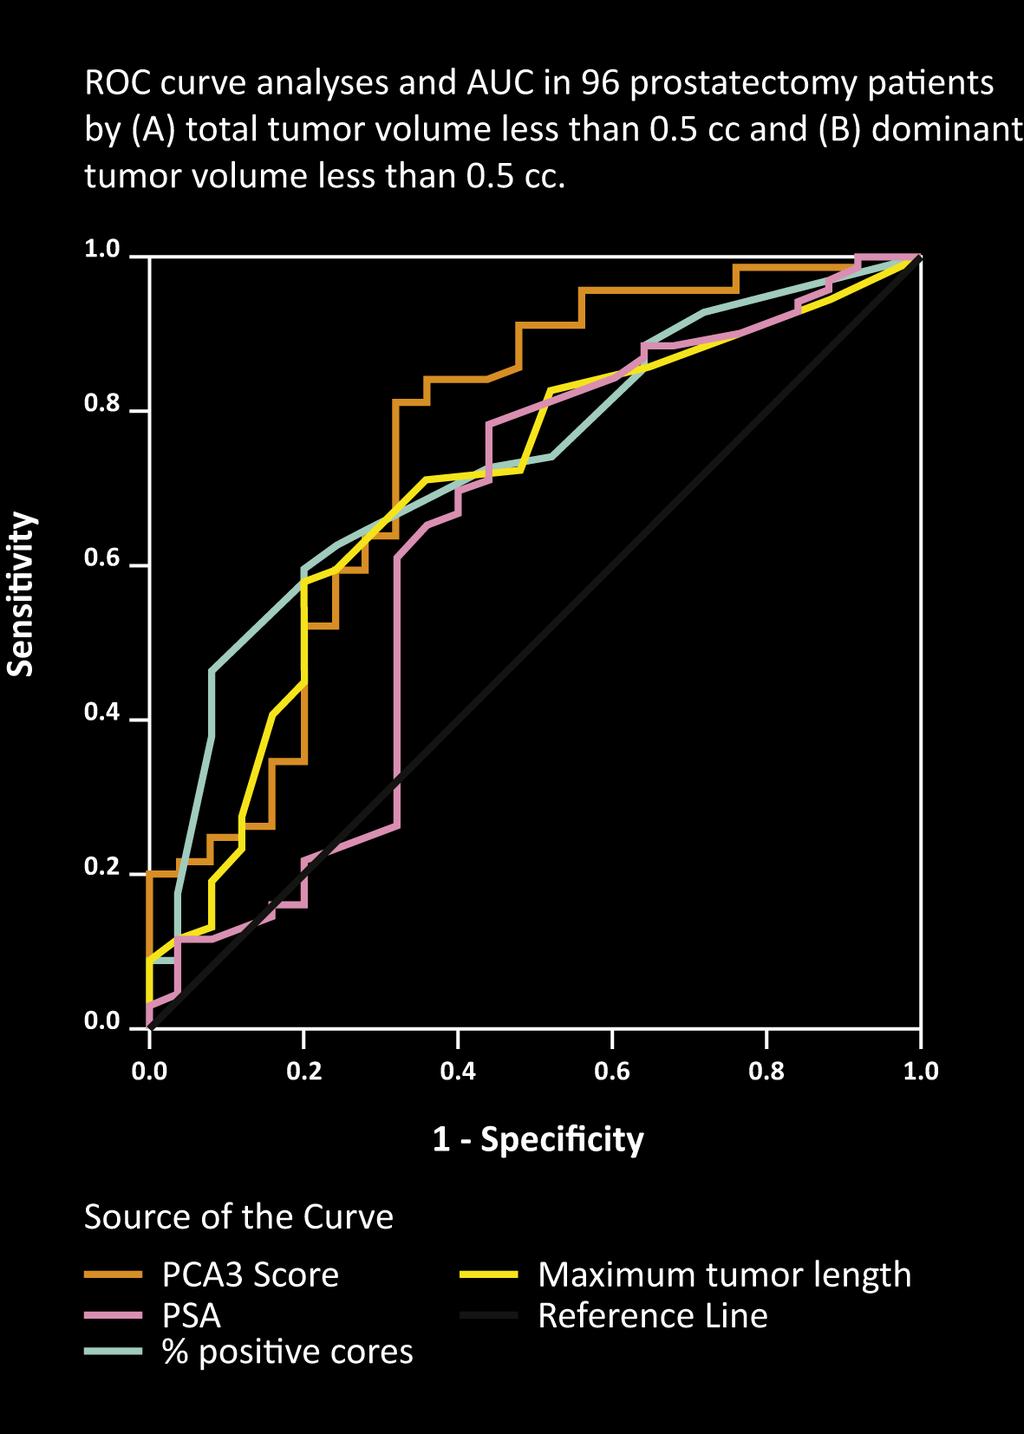 PCA3 score better than other prognostic factors to predict small tumour volume Total Tumor Volume < 0.5 cc Variables AUC Asymptotic significance PCA3 score 0.757 <0.001 PSA 0.